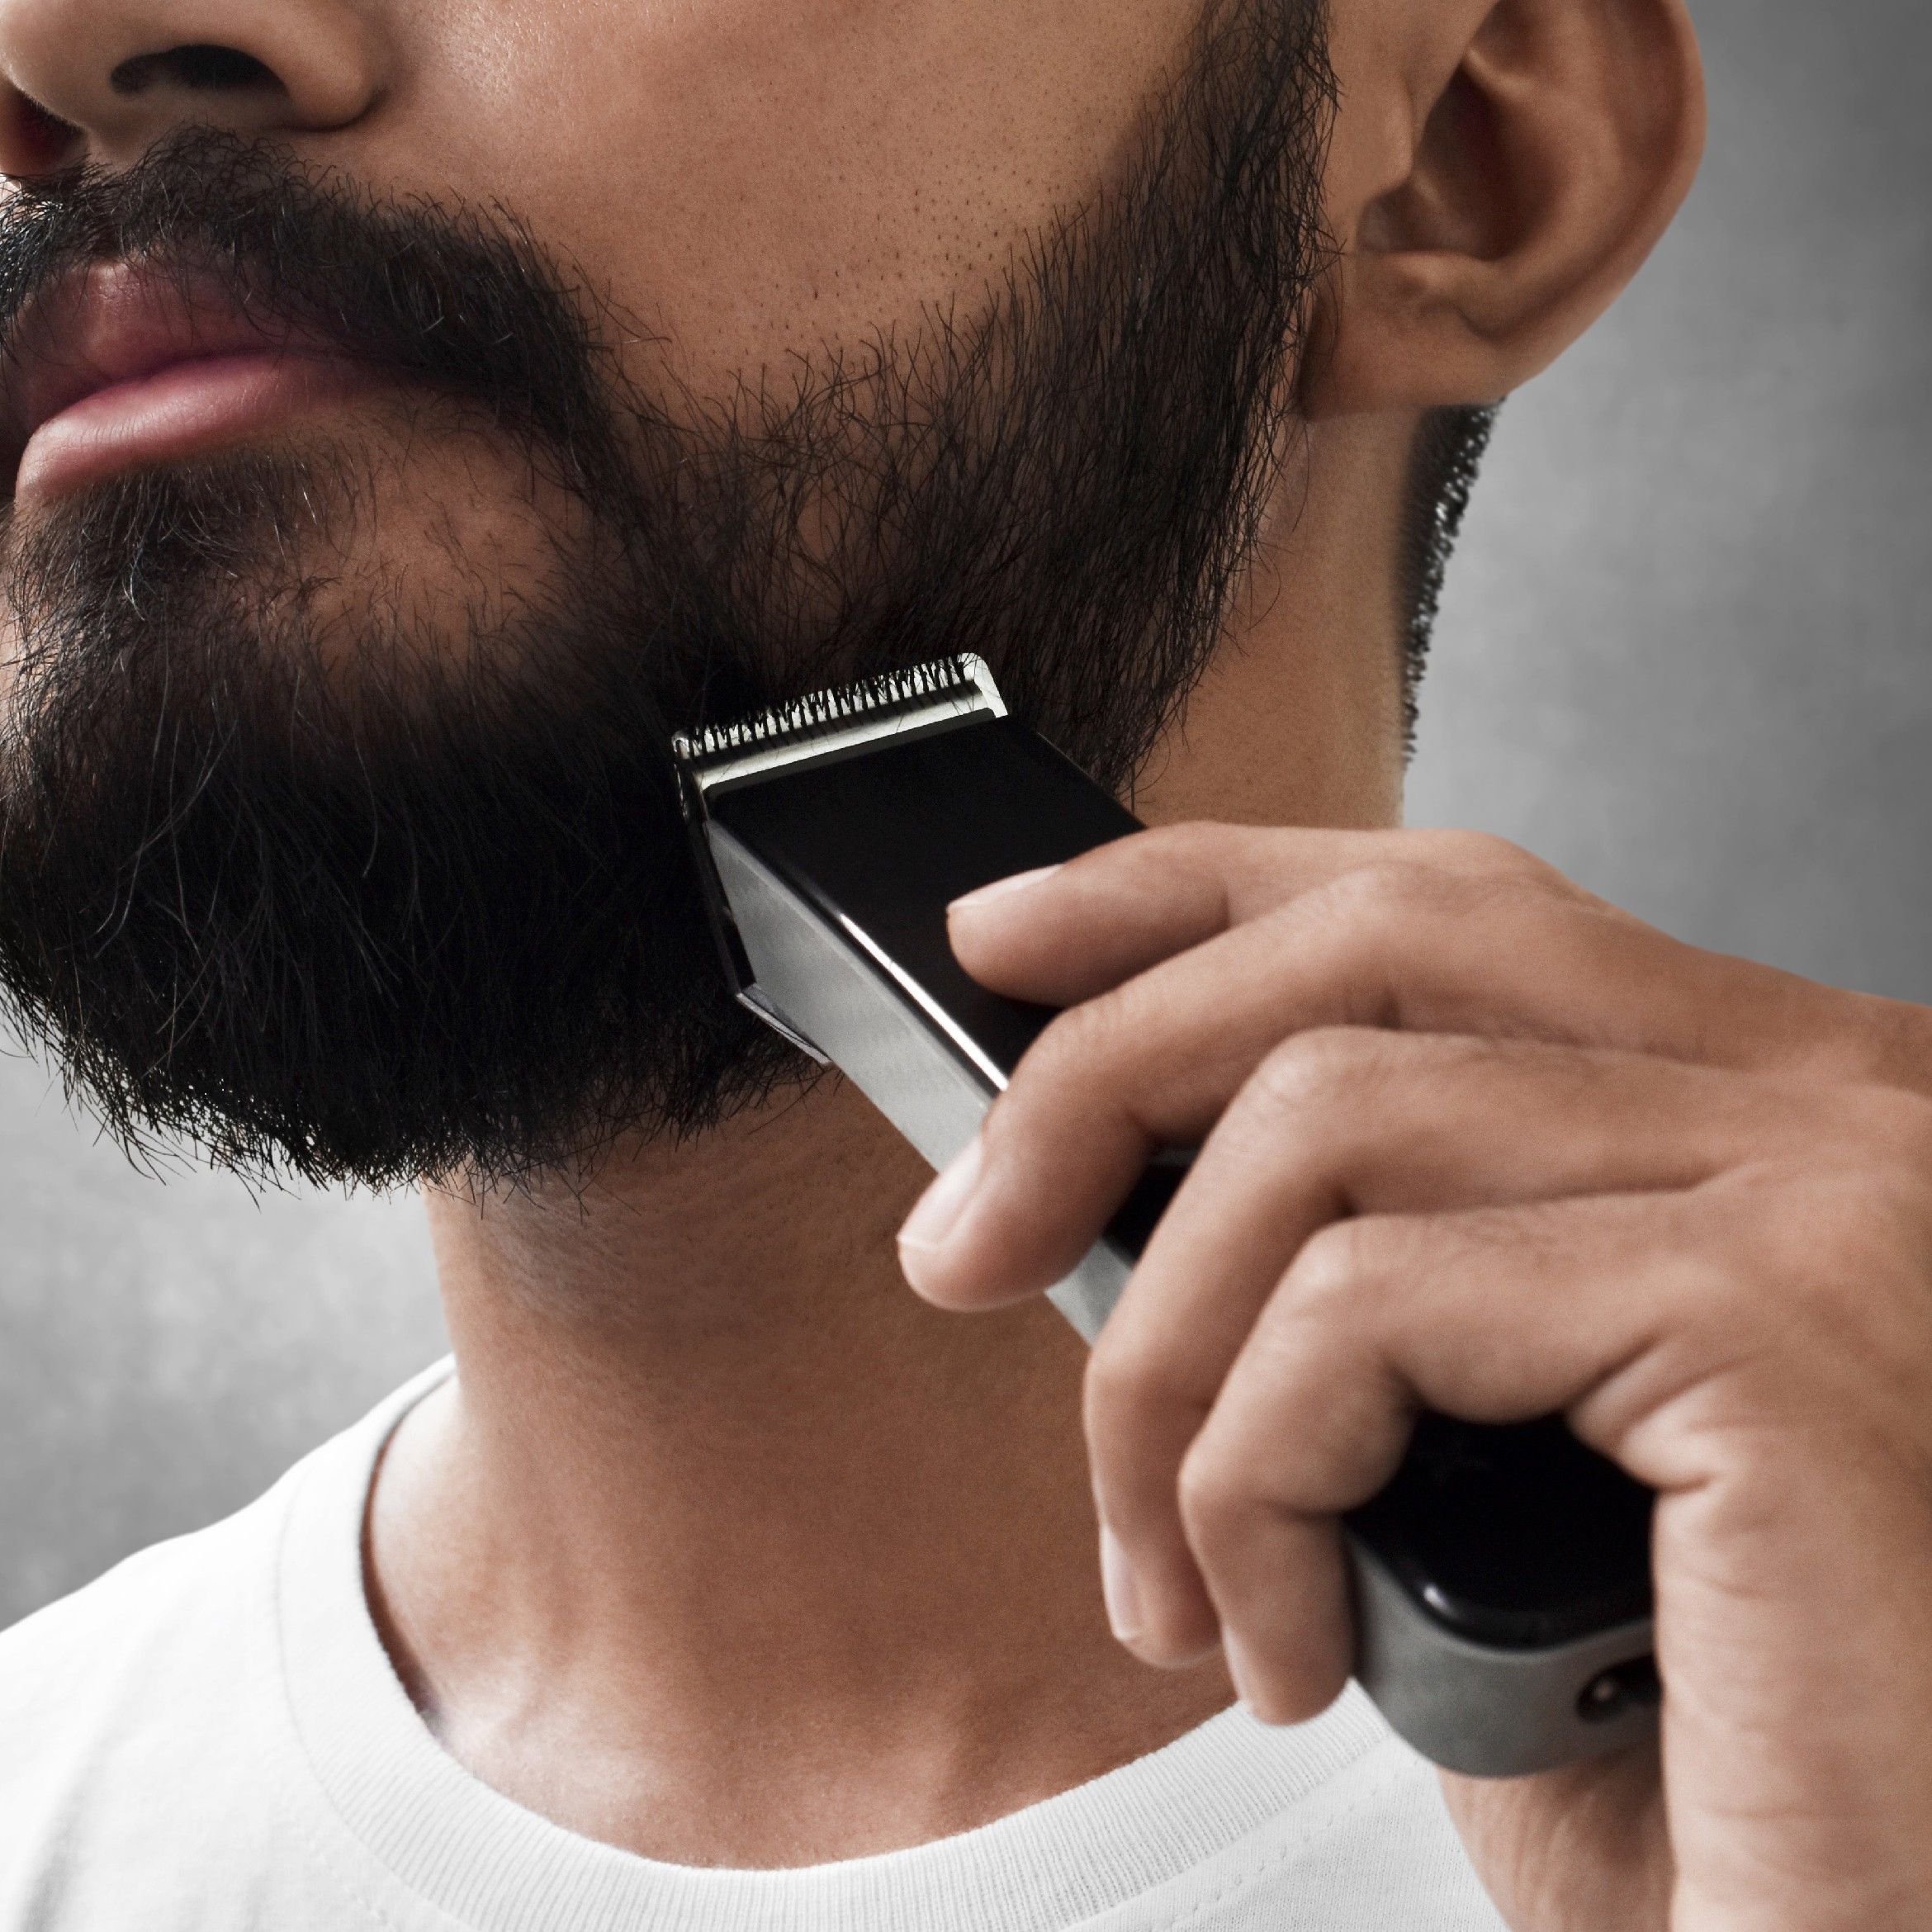 Beard trim - Buzz Cut - Line Up portfolio